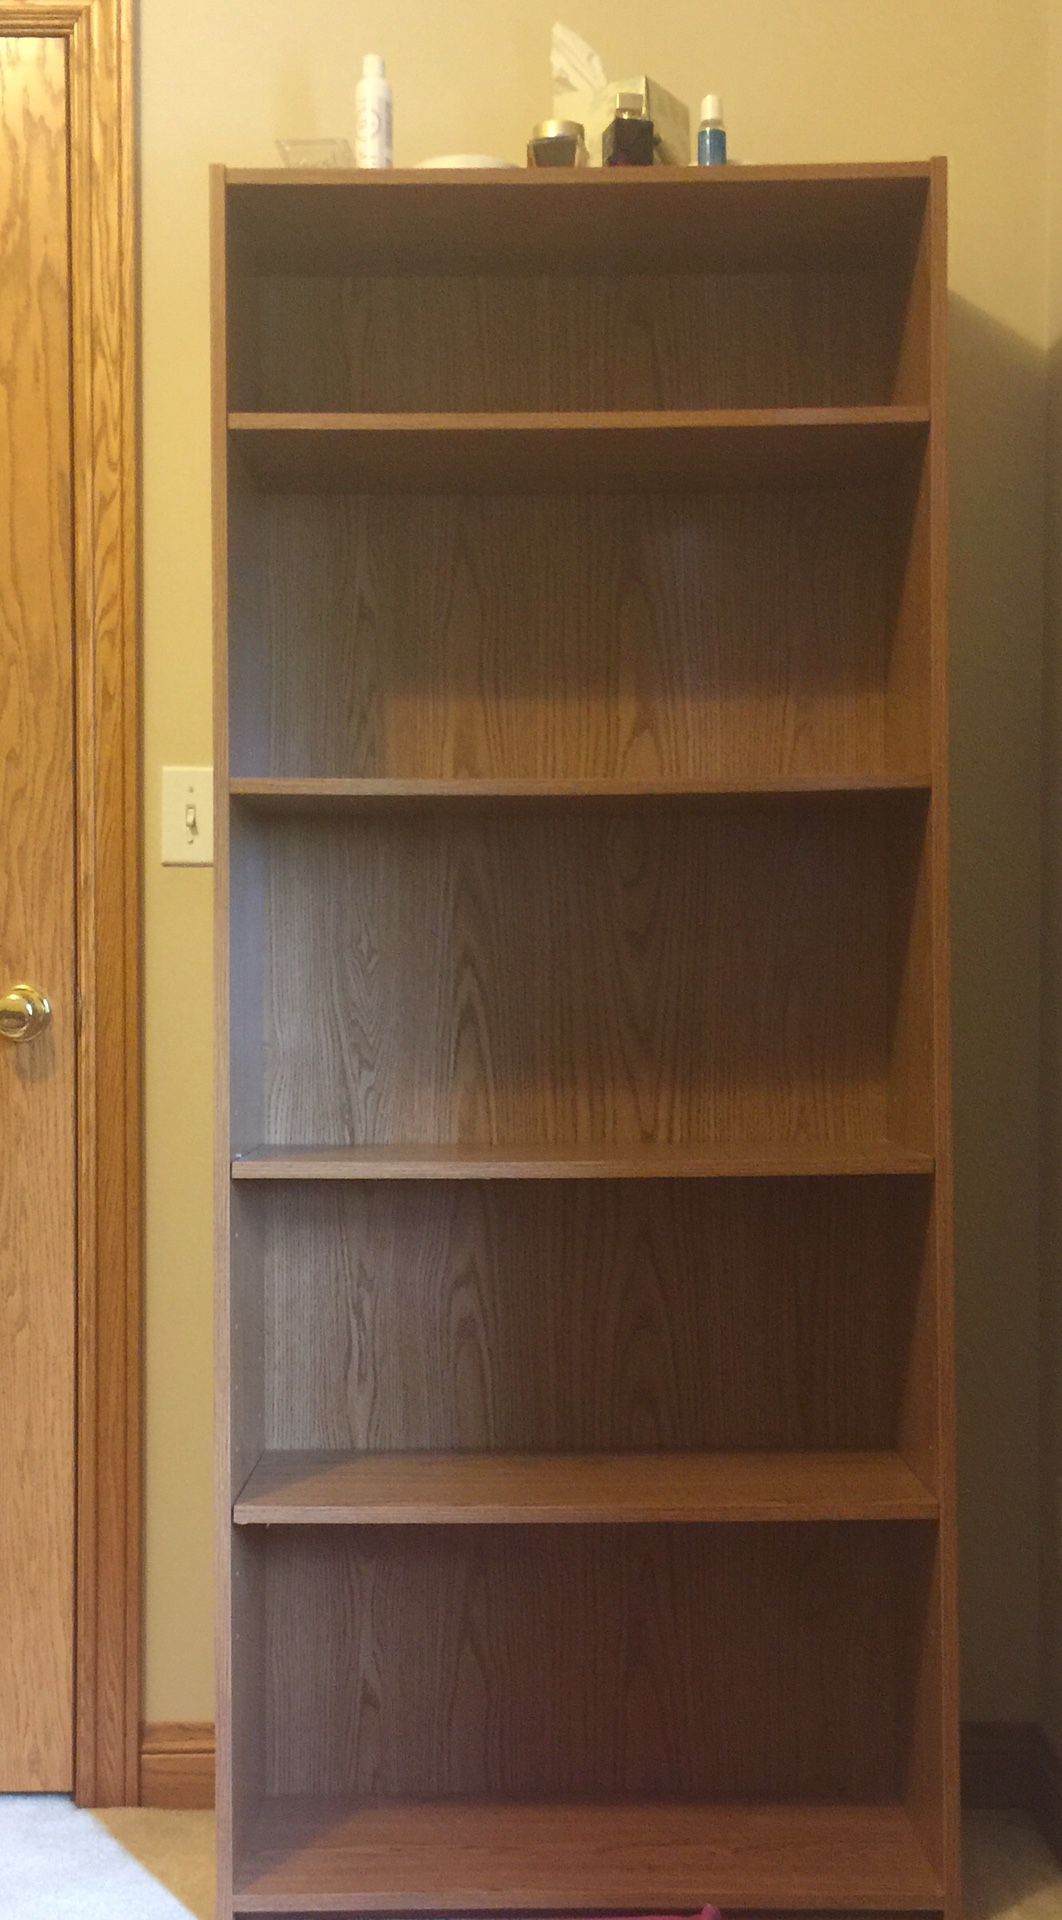 6 foot Shelves